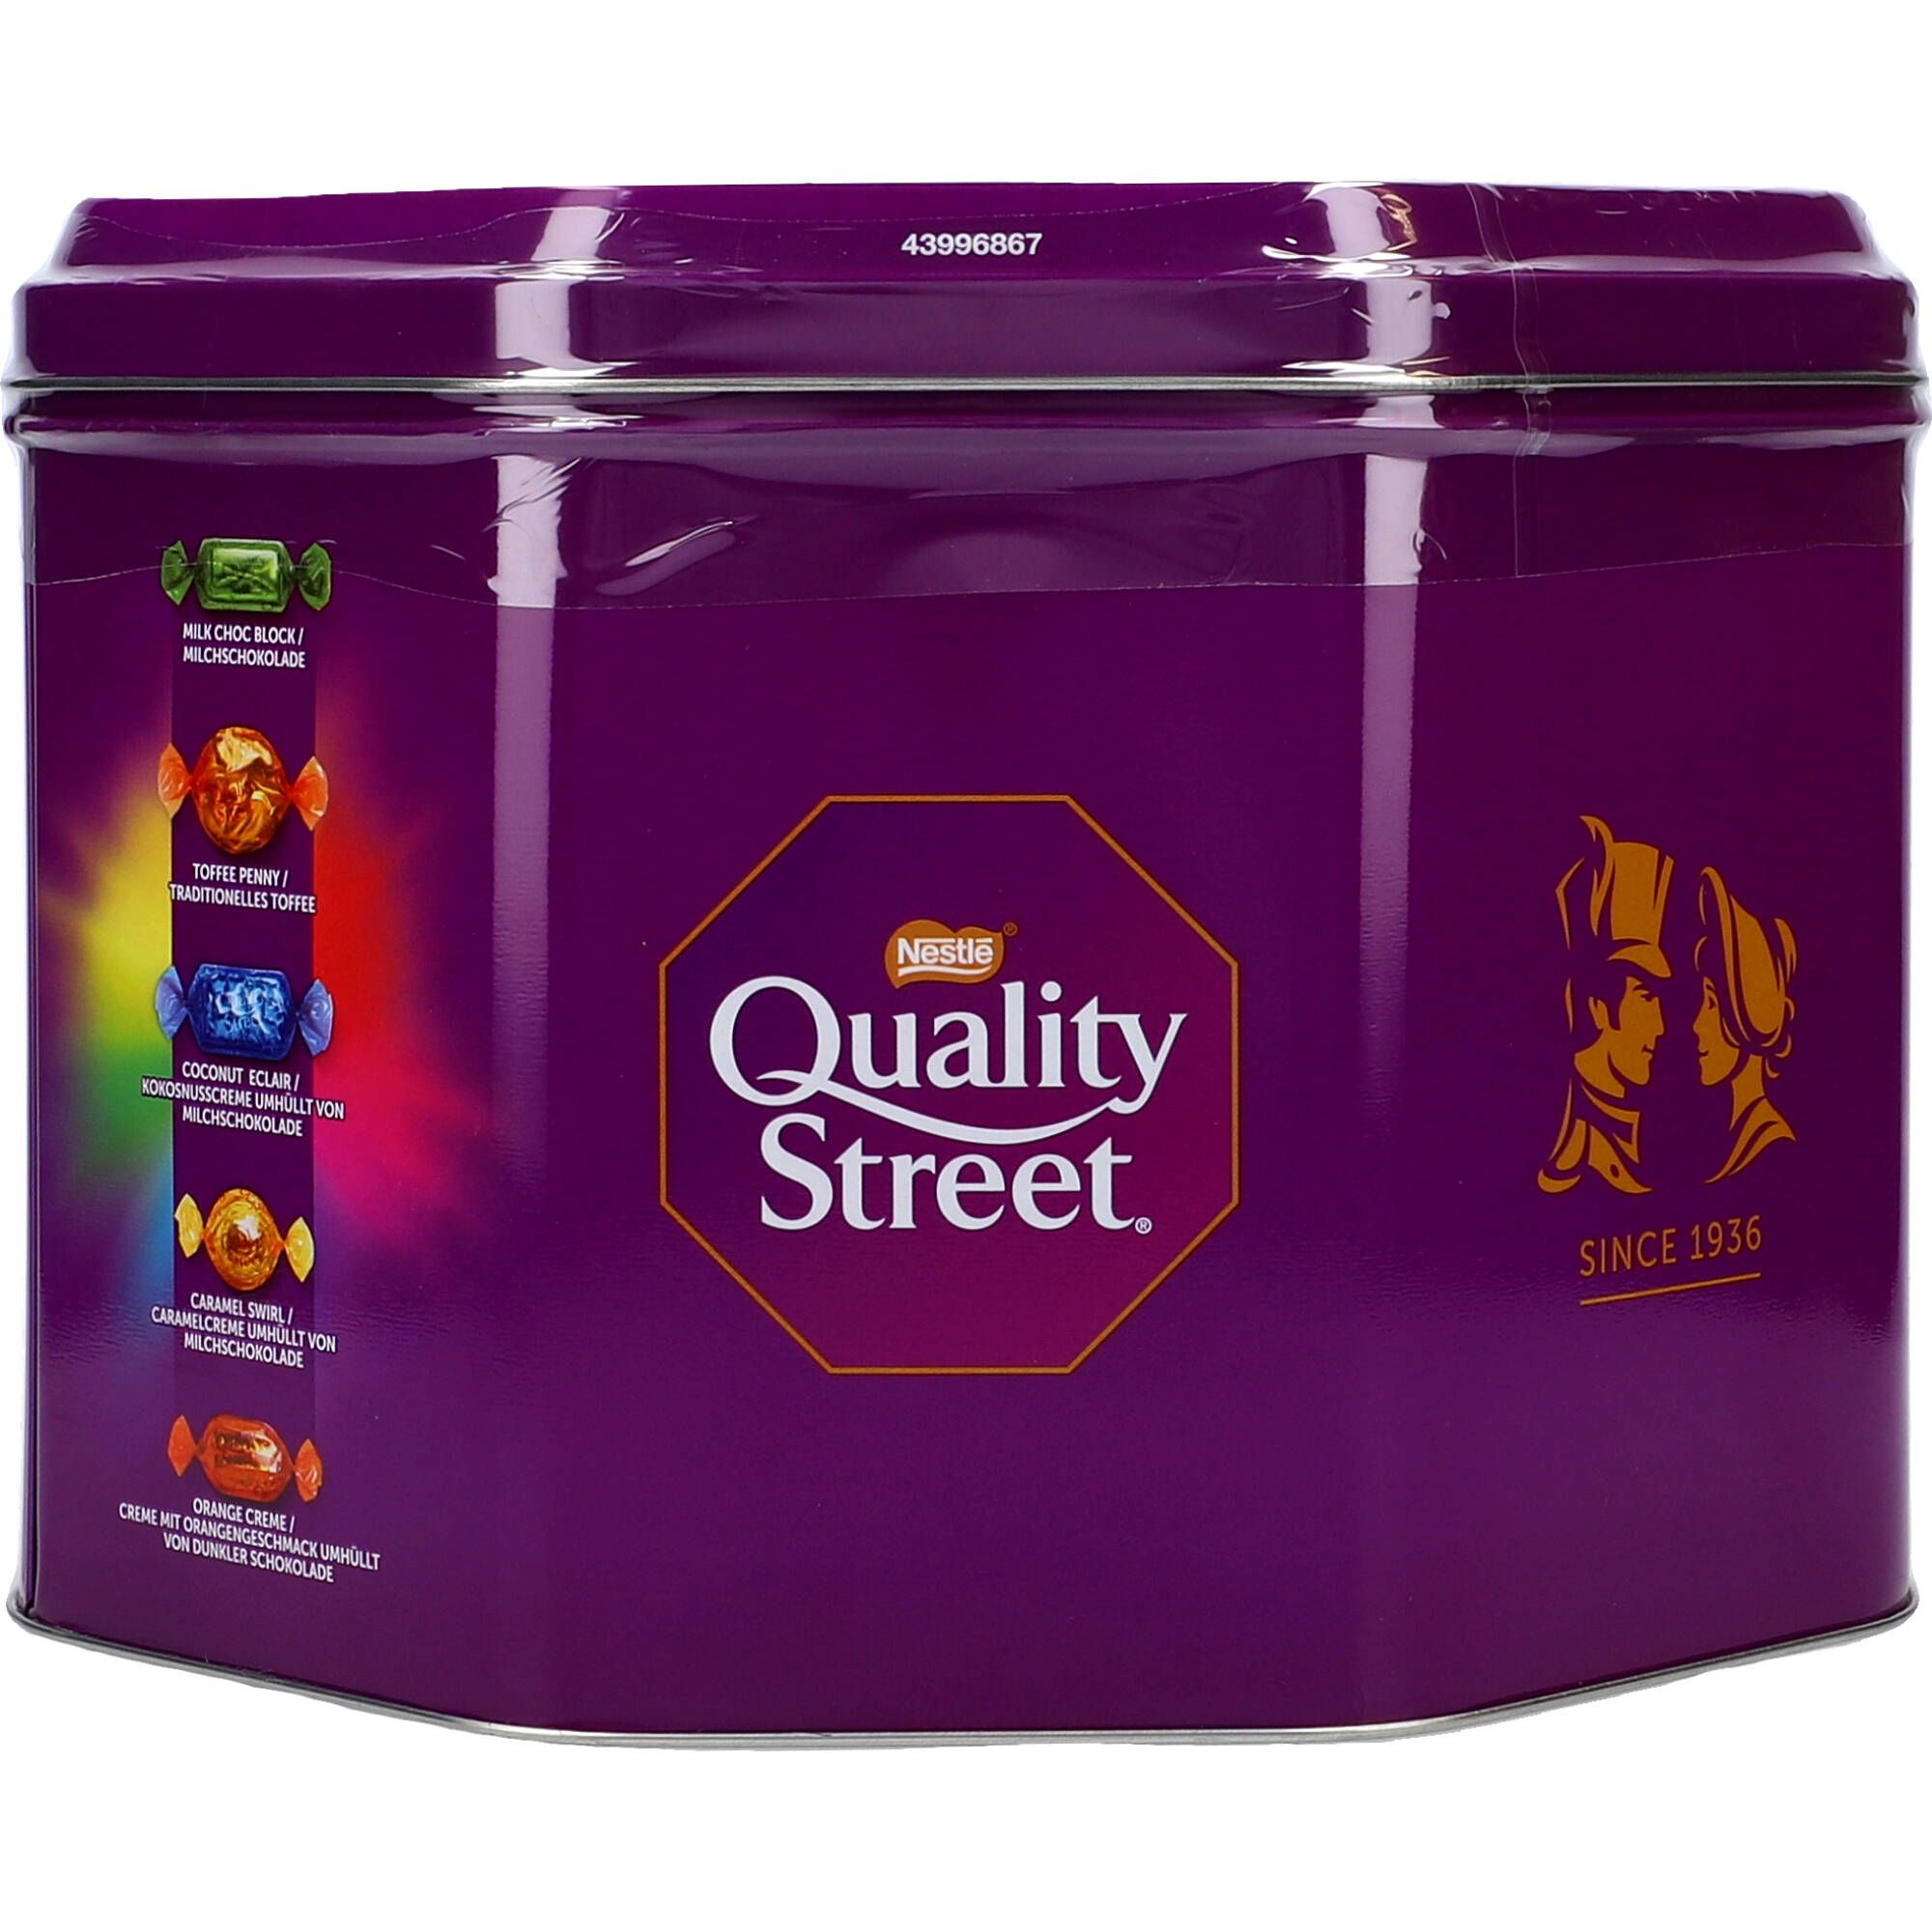 Quality Street chokolade 2,5 kg i tindåse - køb her!